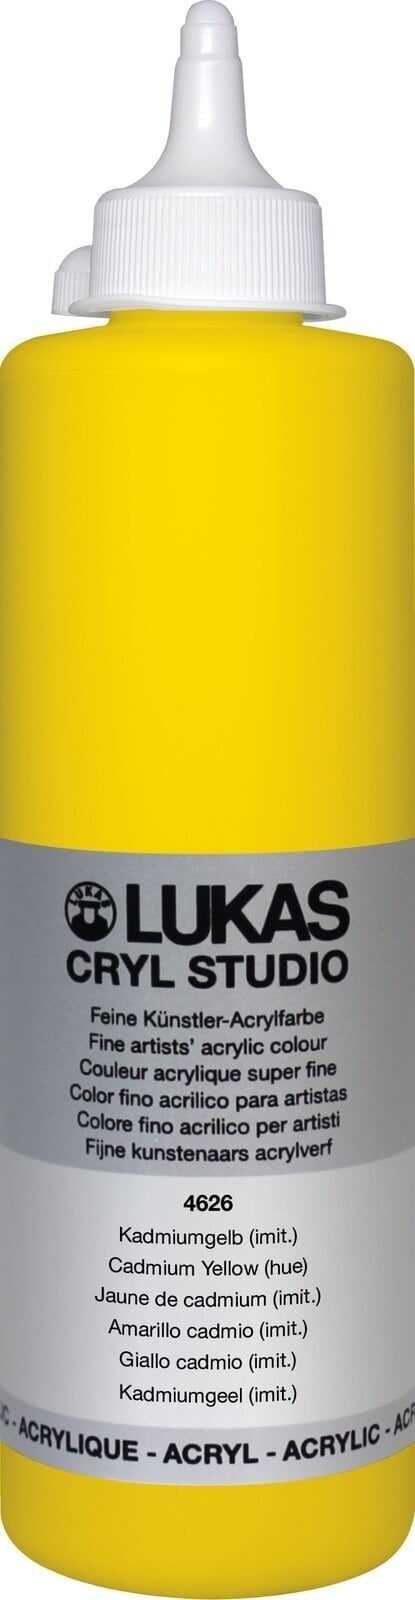 Peinture acrylique Lukas Cryl Studio Peinture acrylique 500 ml Cadmium Yellow Hue